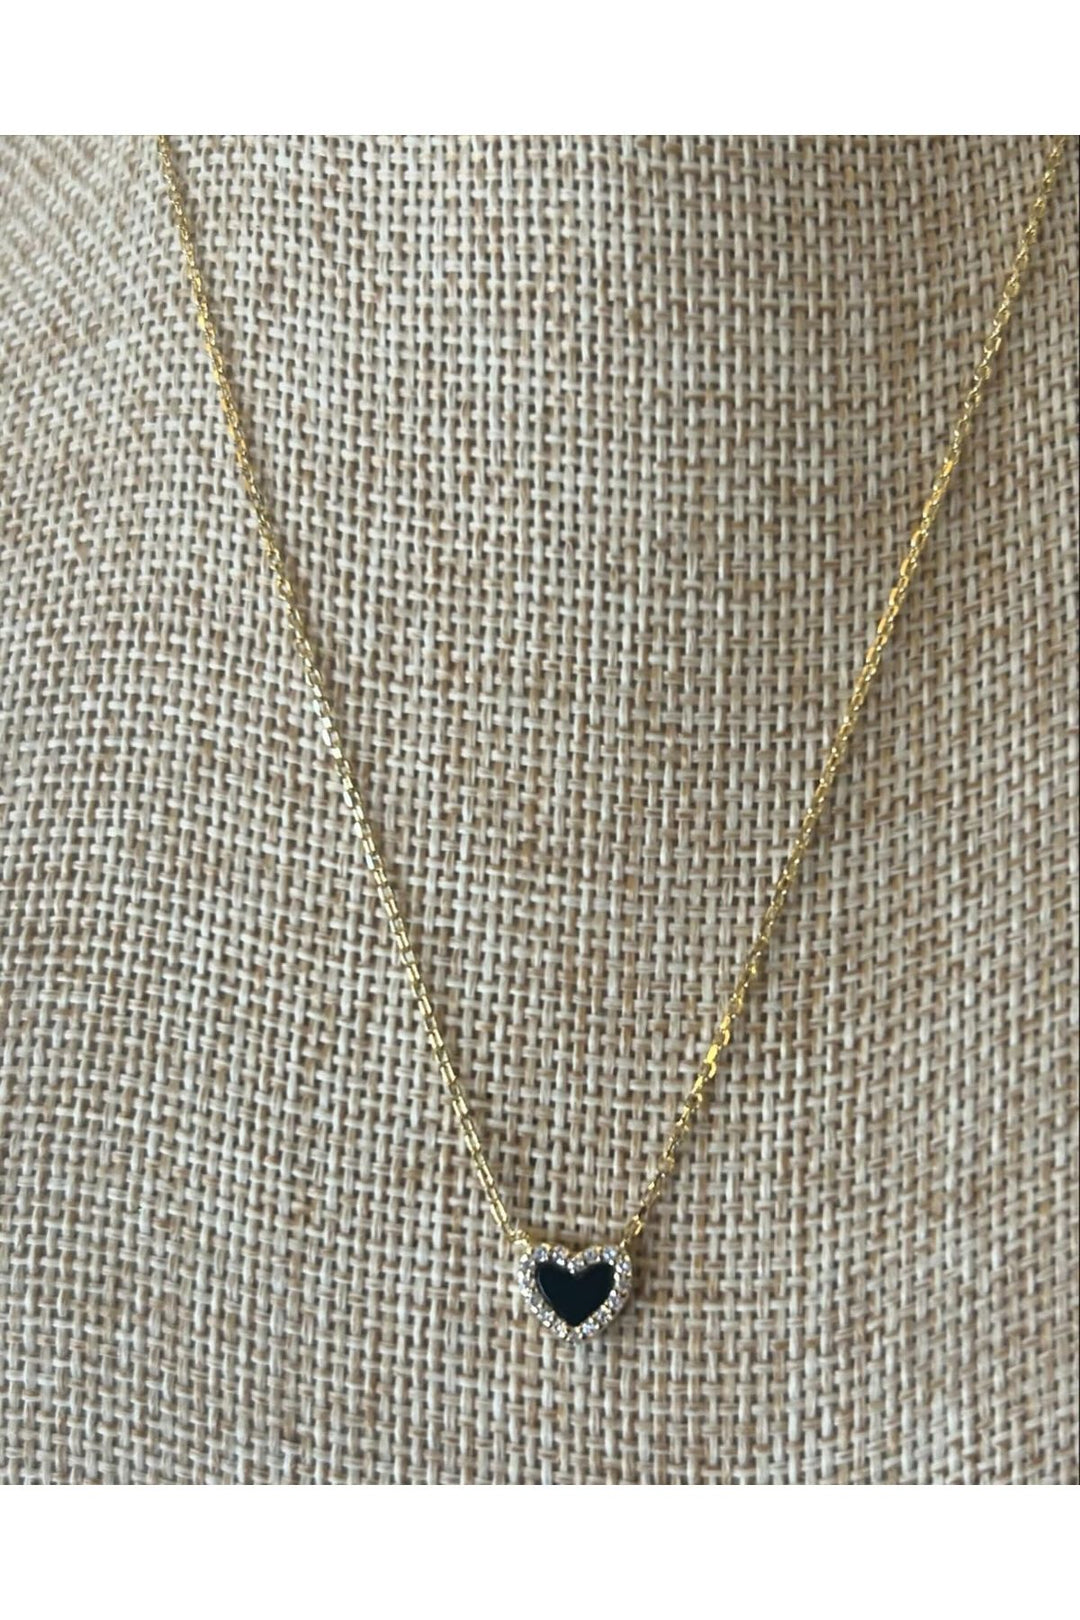 Bara Boheme Black Heart Gold Necklace - Vintage Dragonfly Boutique